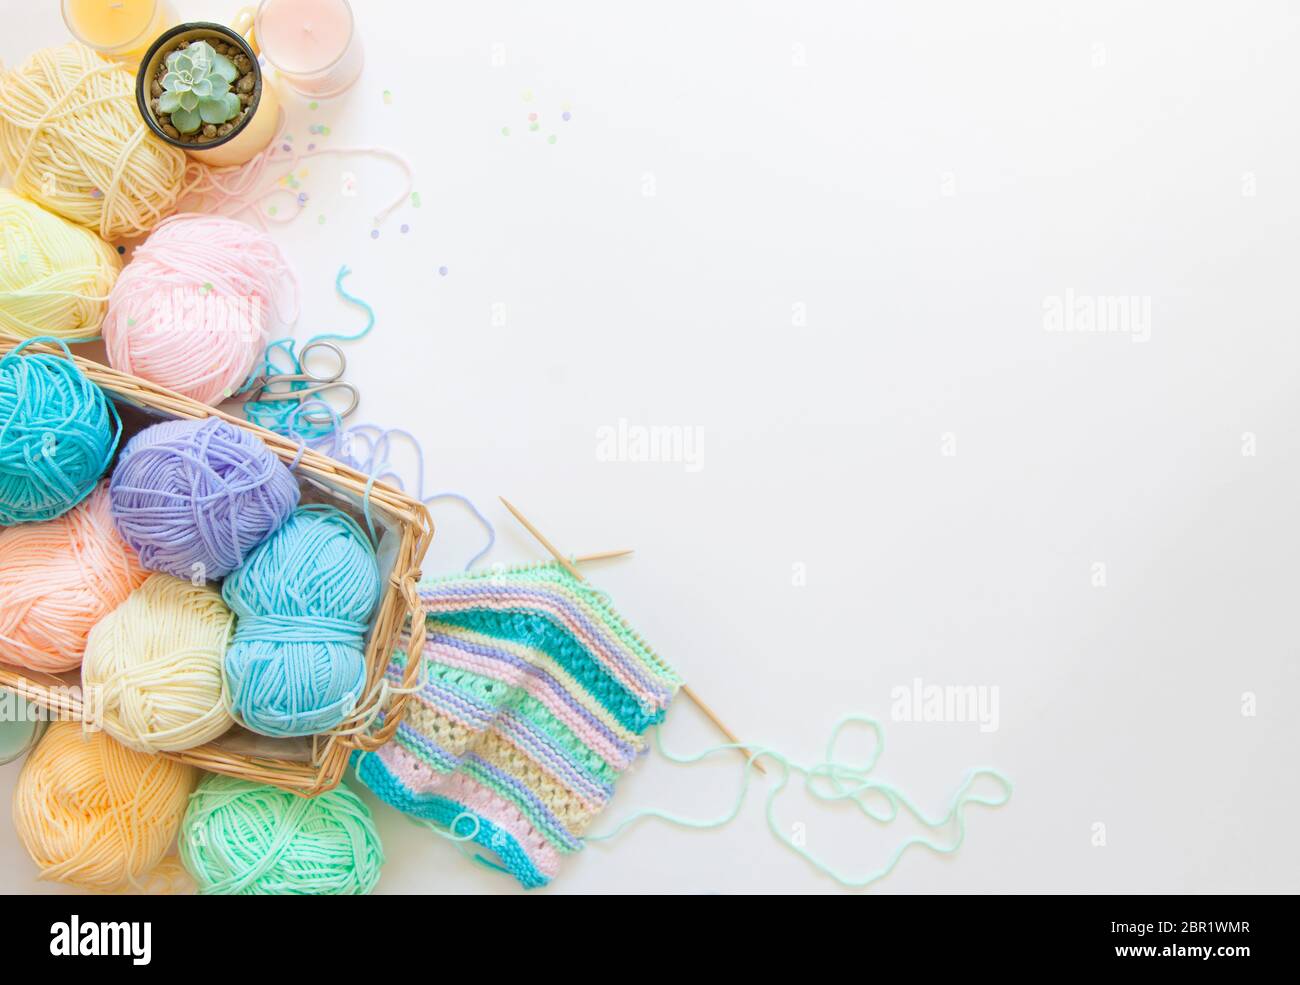 Color pastel yarn for knitting, knitting needles and crochet hooks